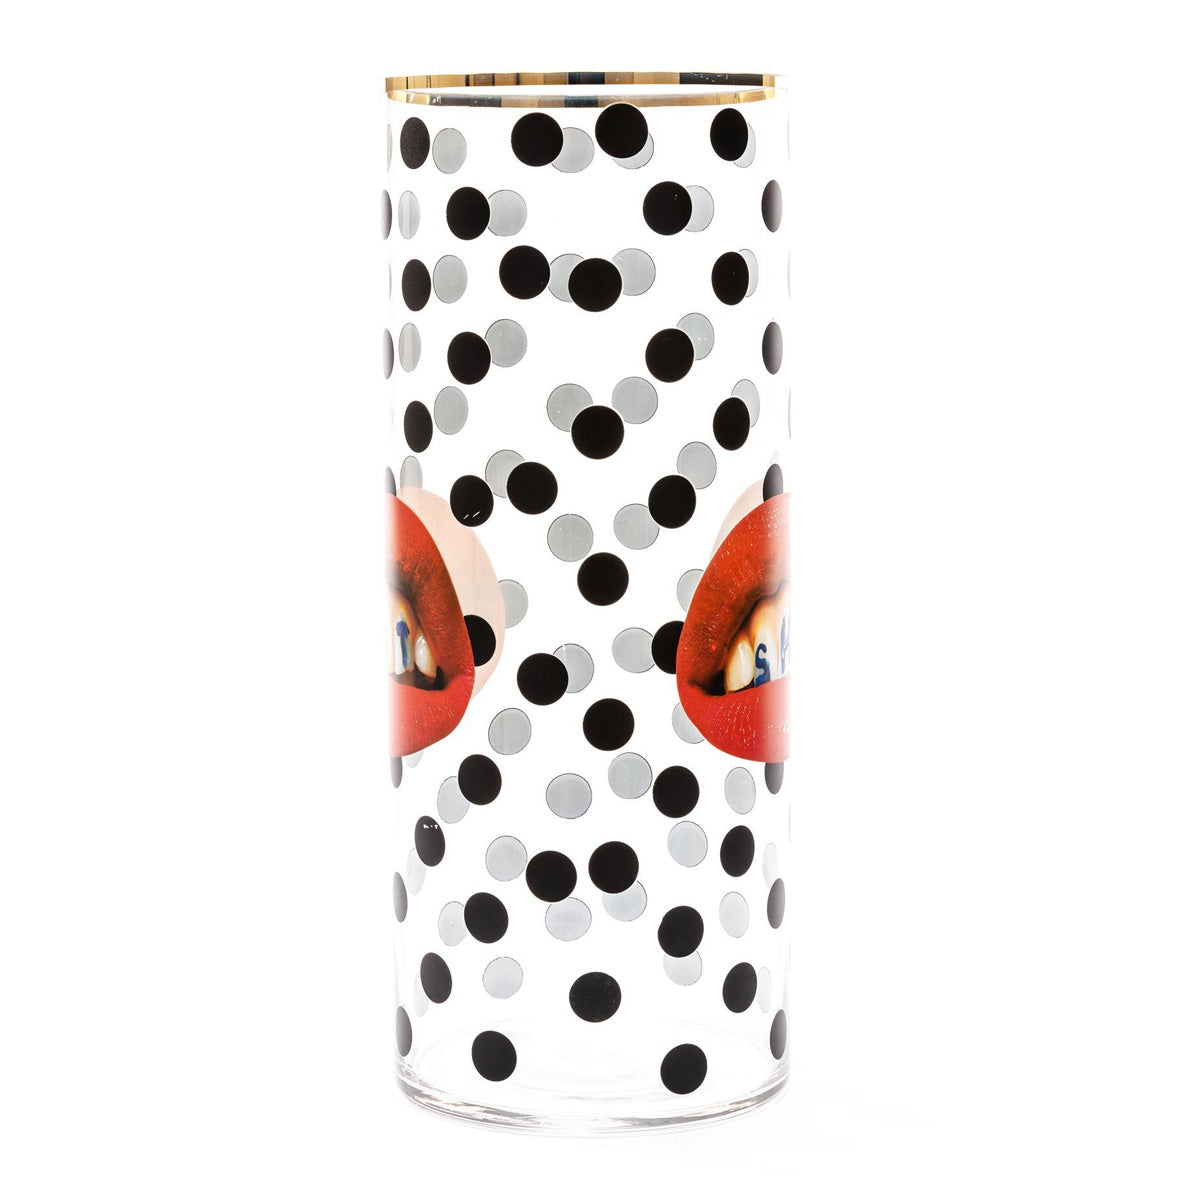 Seletti X Toiletpaper &#39;Shit&#39; Cylindrical Glass Vase